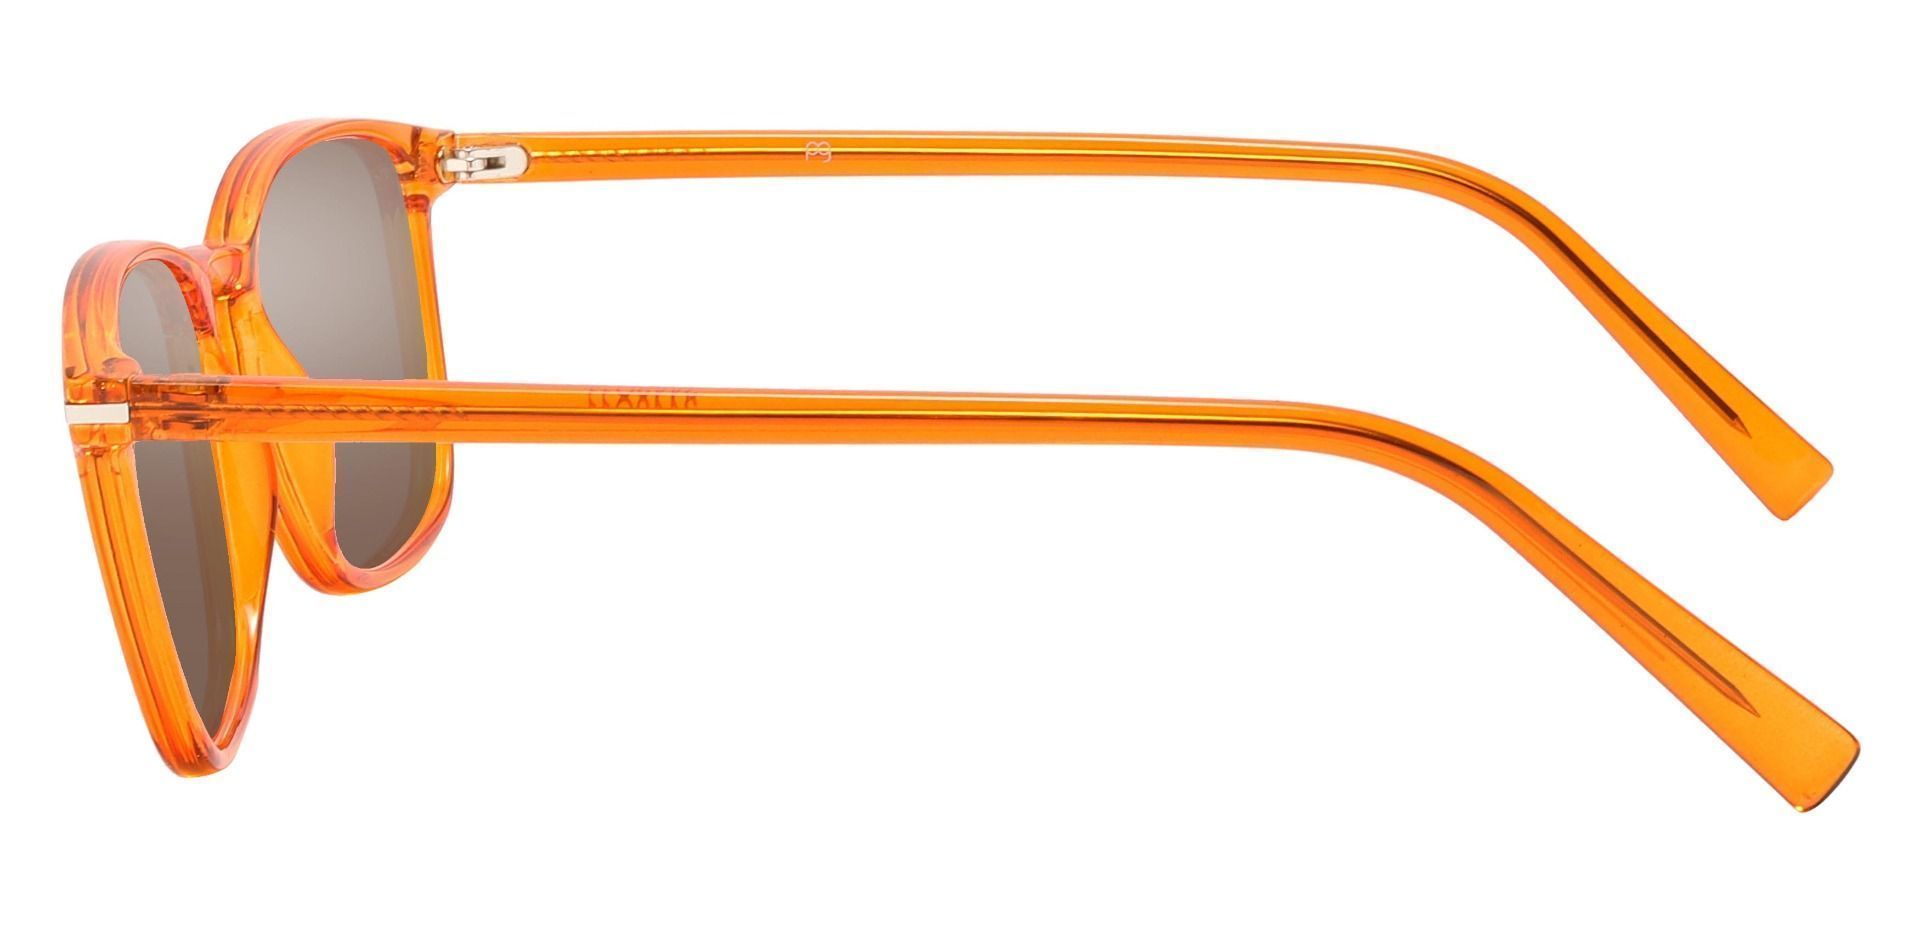 Dumont Rectangle Reading Sunglasses - Orange Frame With Brown Lenses